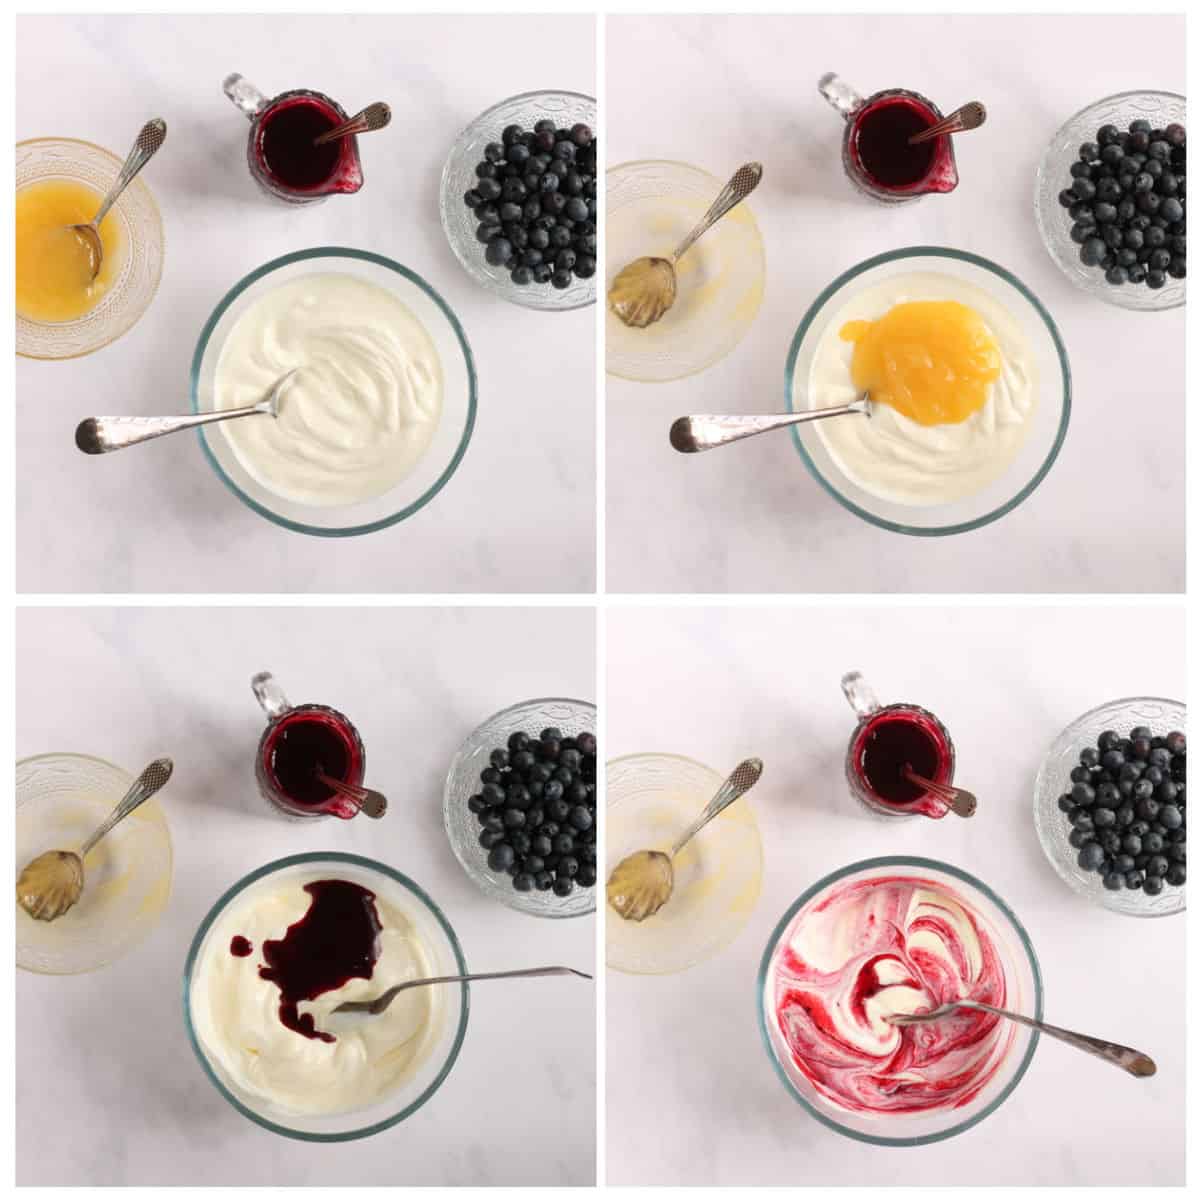 Step-by-step photo instructions for frozen blueberry yogurt bites